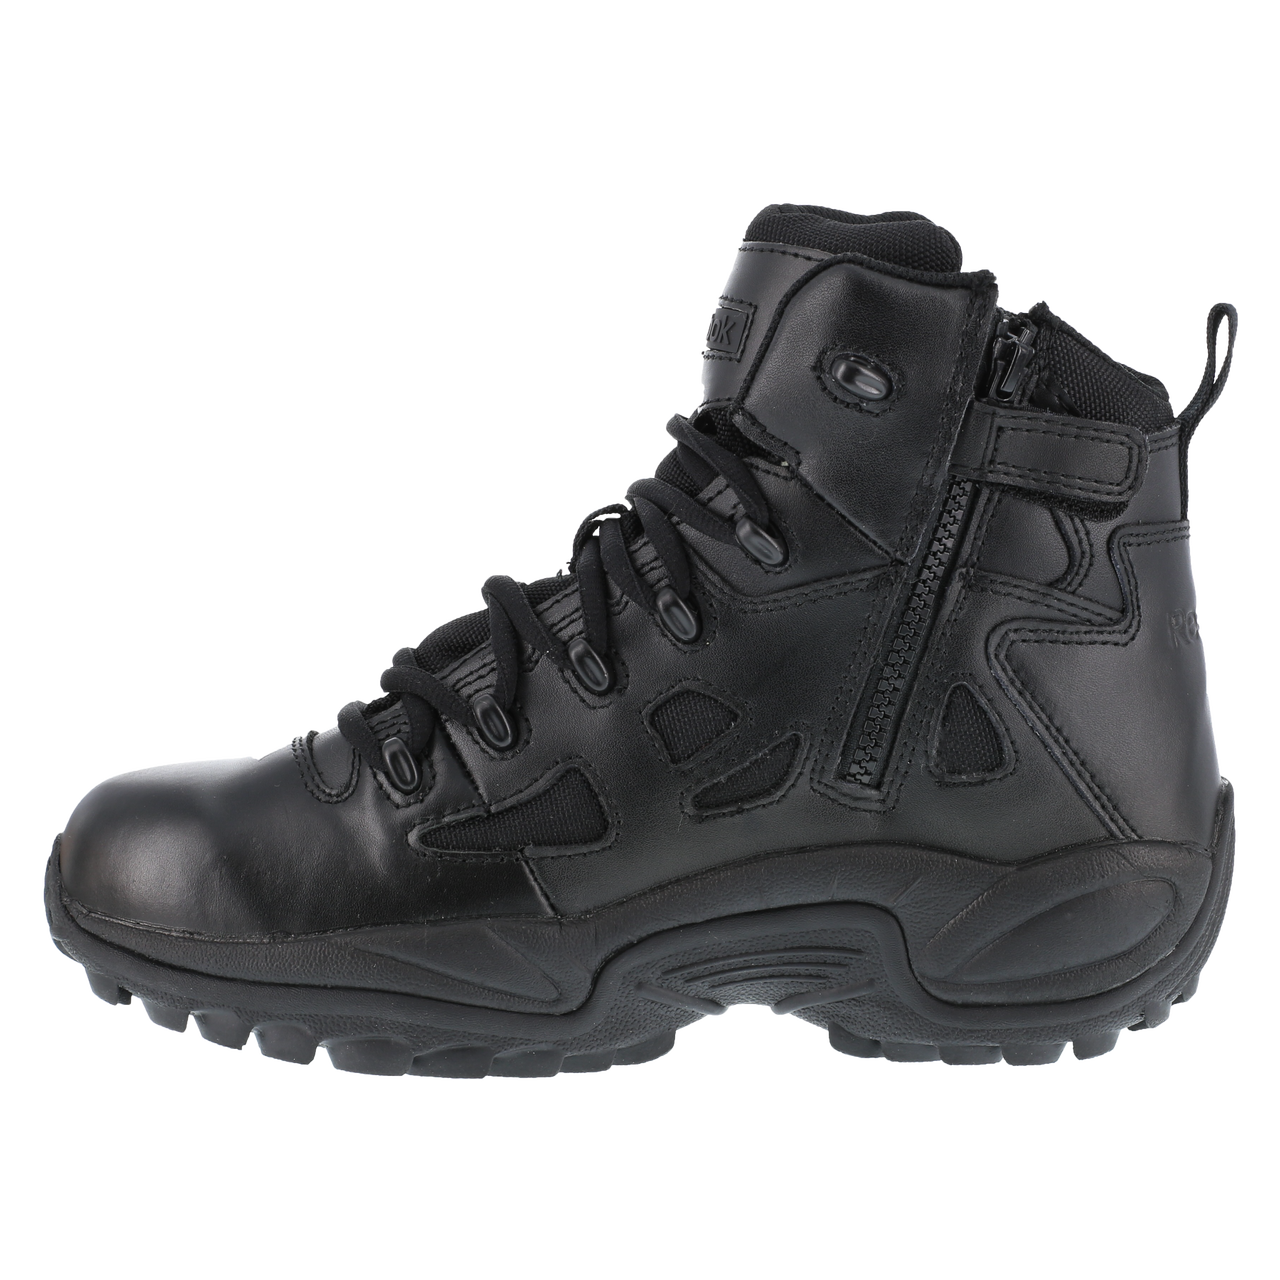 Reebok Tactical Men's 6 Inch Rapid Response RB Side Zip Boots Black RB8678 Footwear Reebok Tactical Boots Tactical Gear Supplier Tactical Distributors Australia